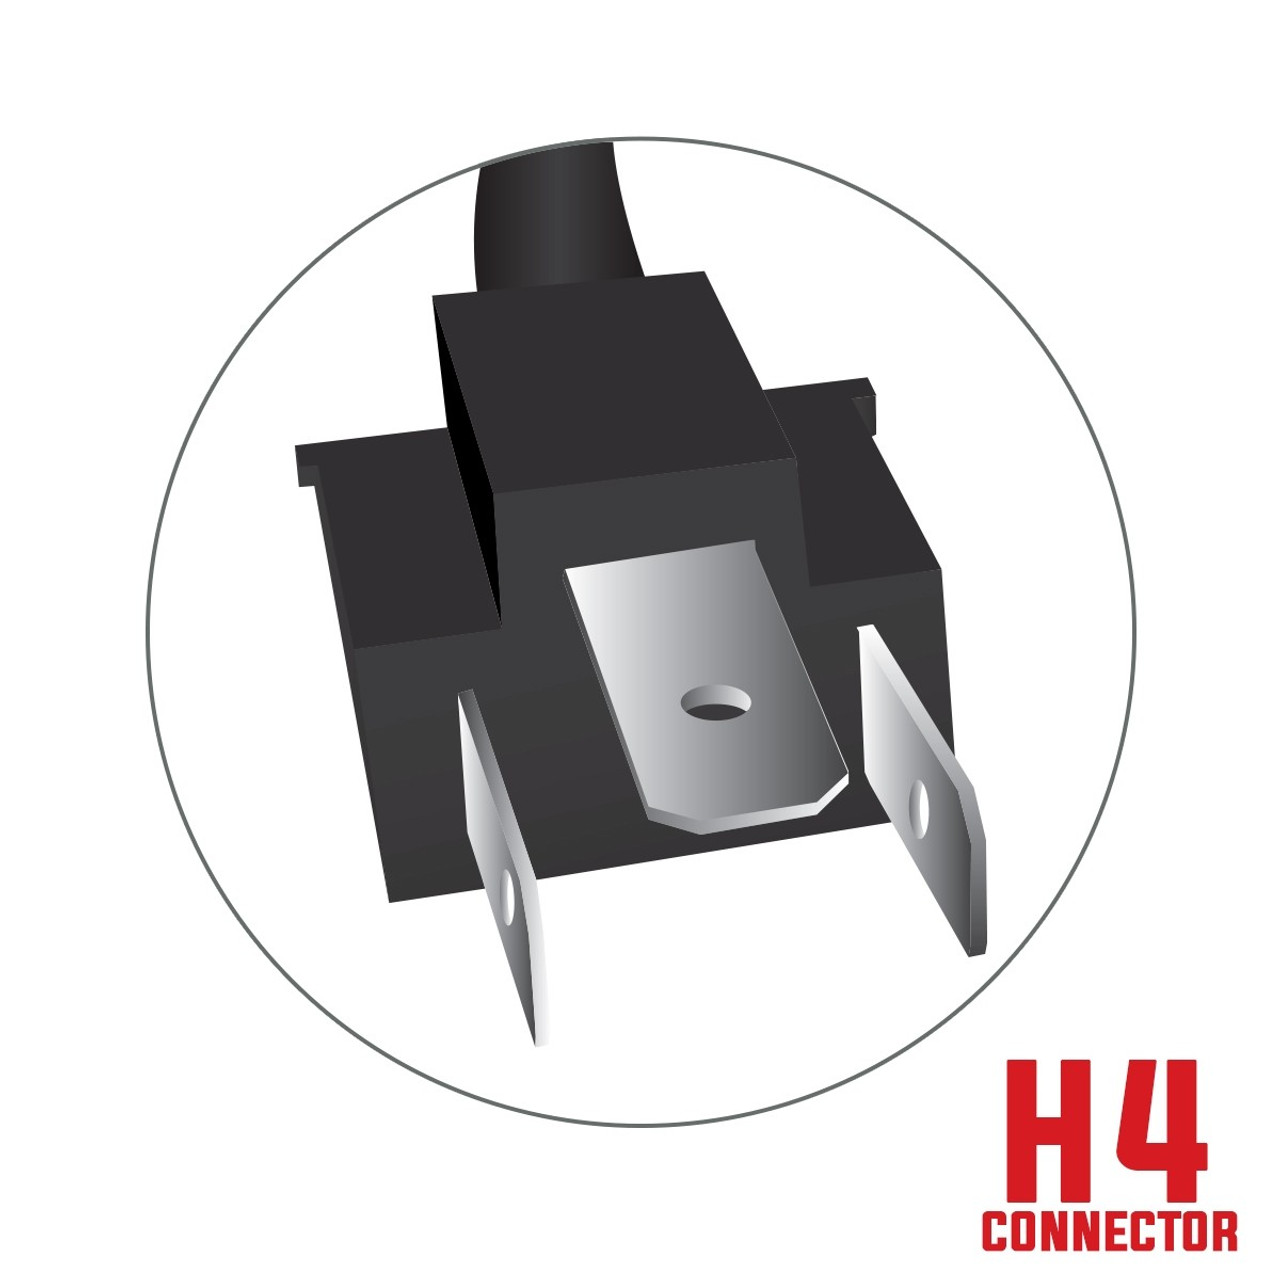 Trux 5"x 7" LED Reflector Headlight (High/Low Beam): TLED-H74